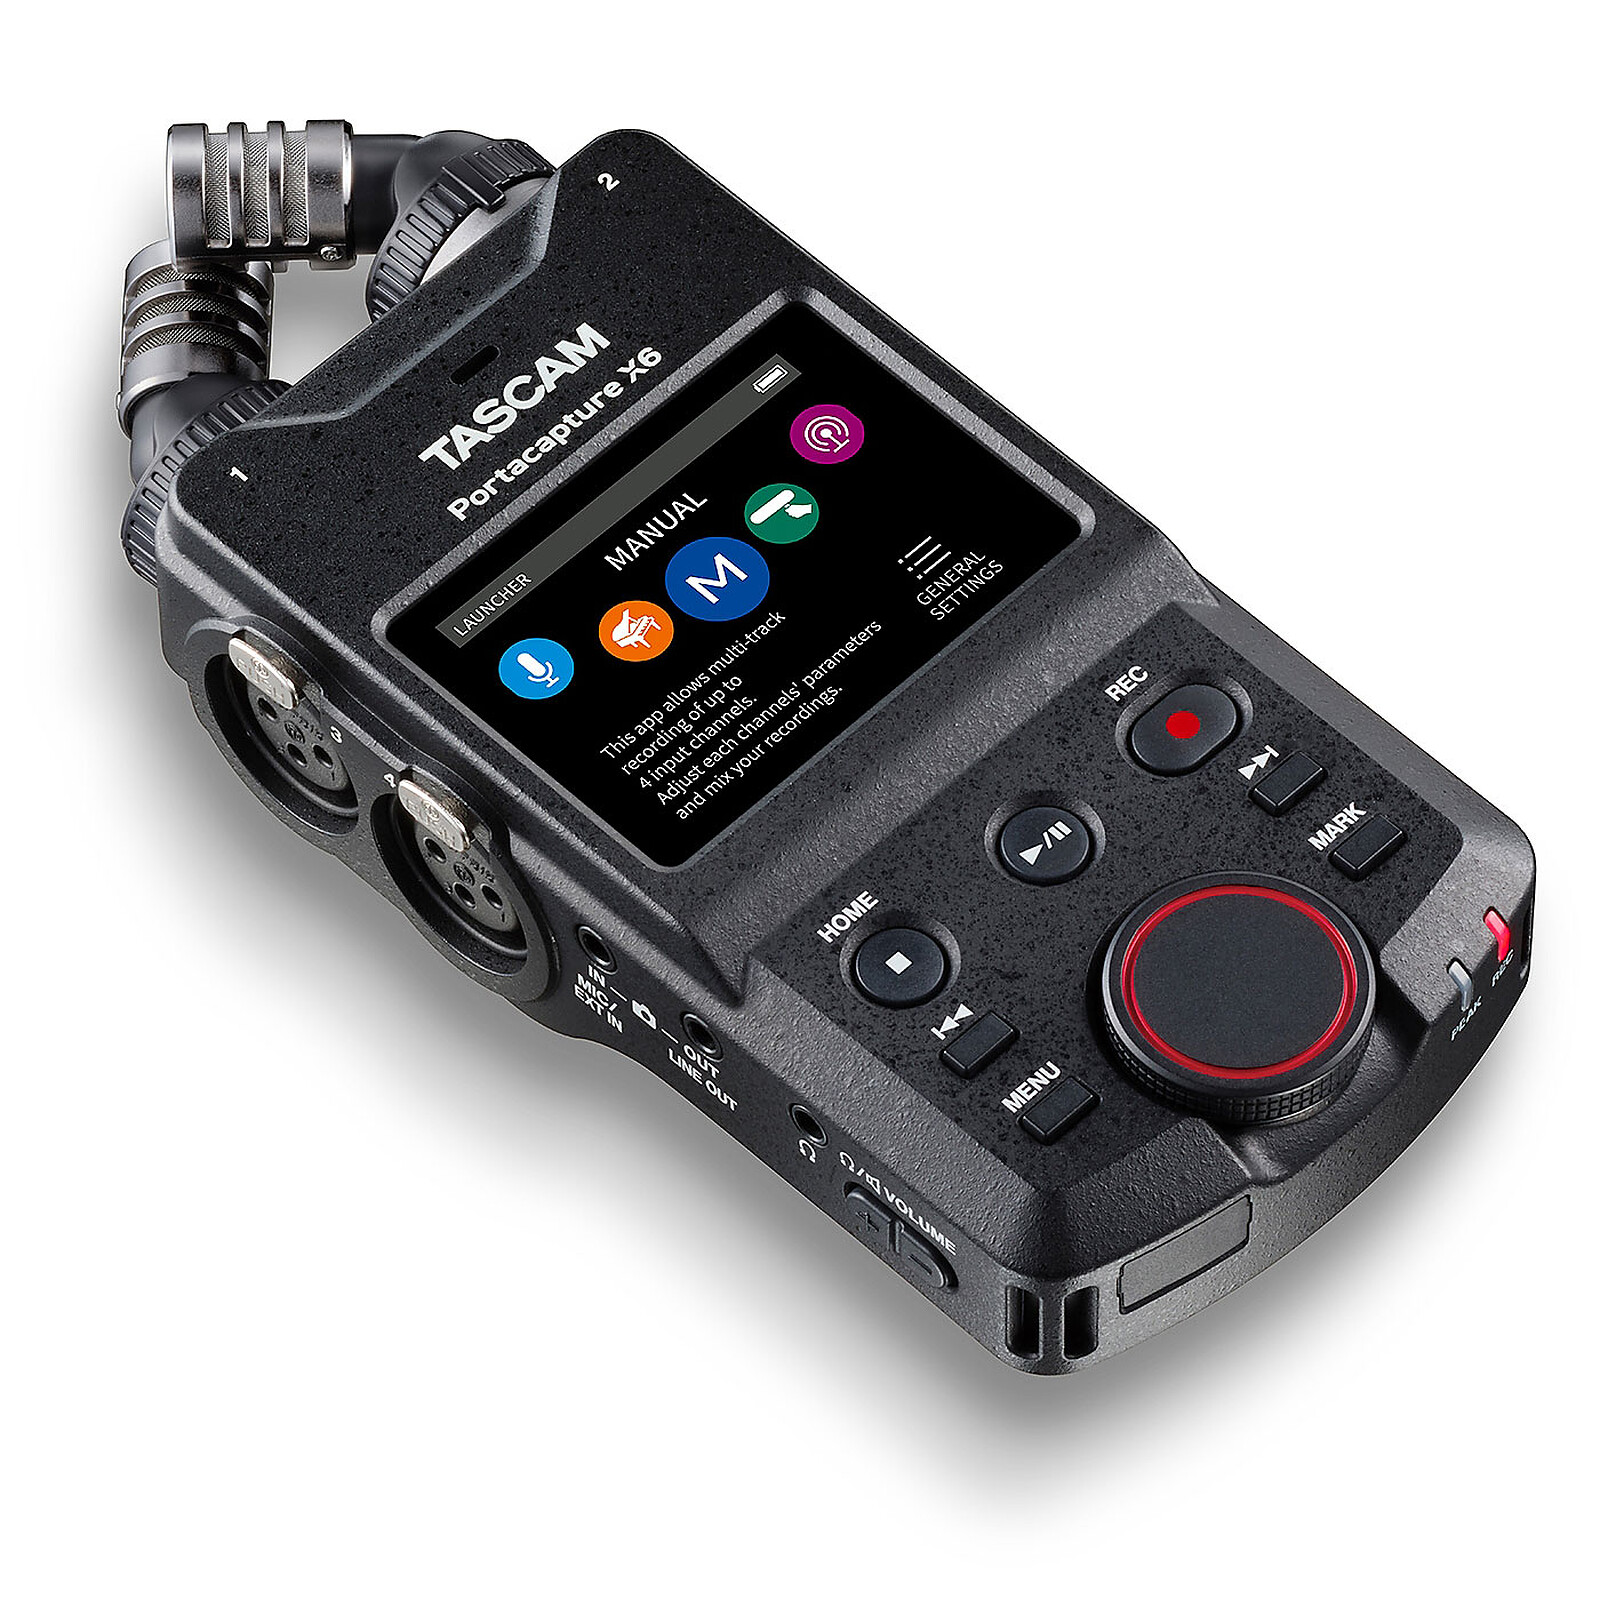 Tascam Portacapture X6 - Dictaphone - Garantie 3 ans LDLC